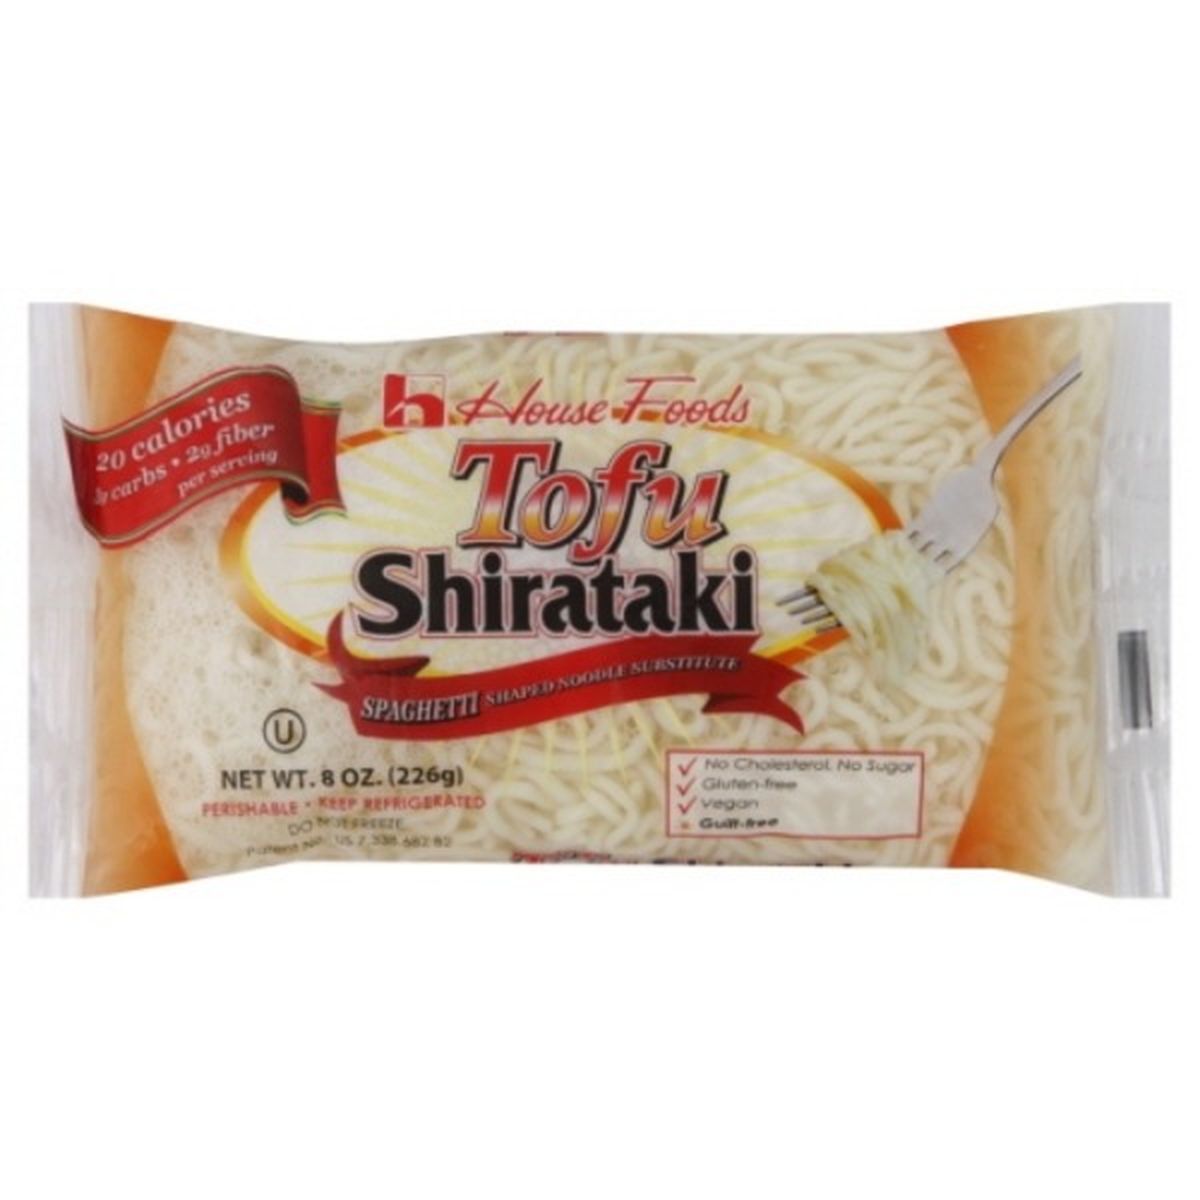 Calories in House Foods Tofu, Shirataki, Spaghetti